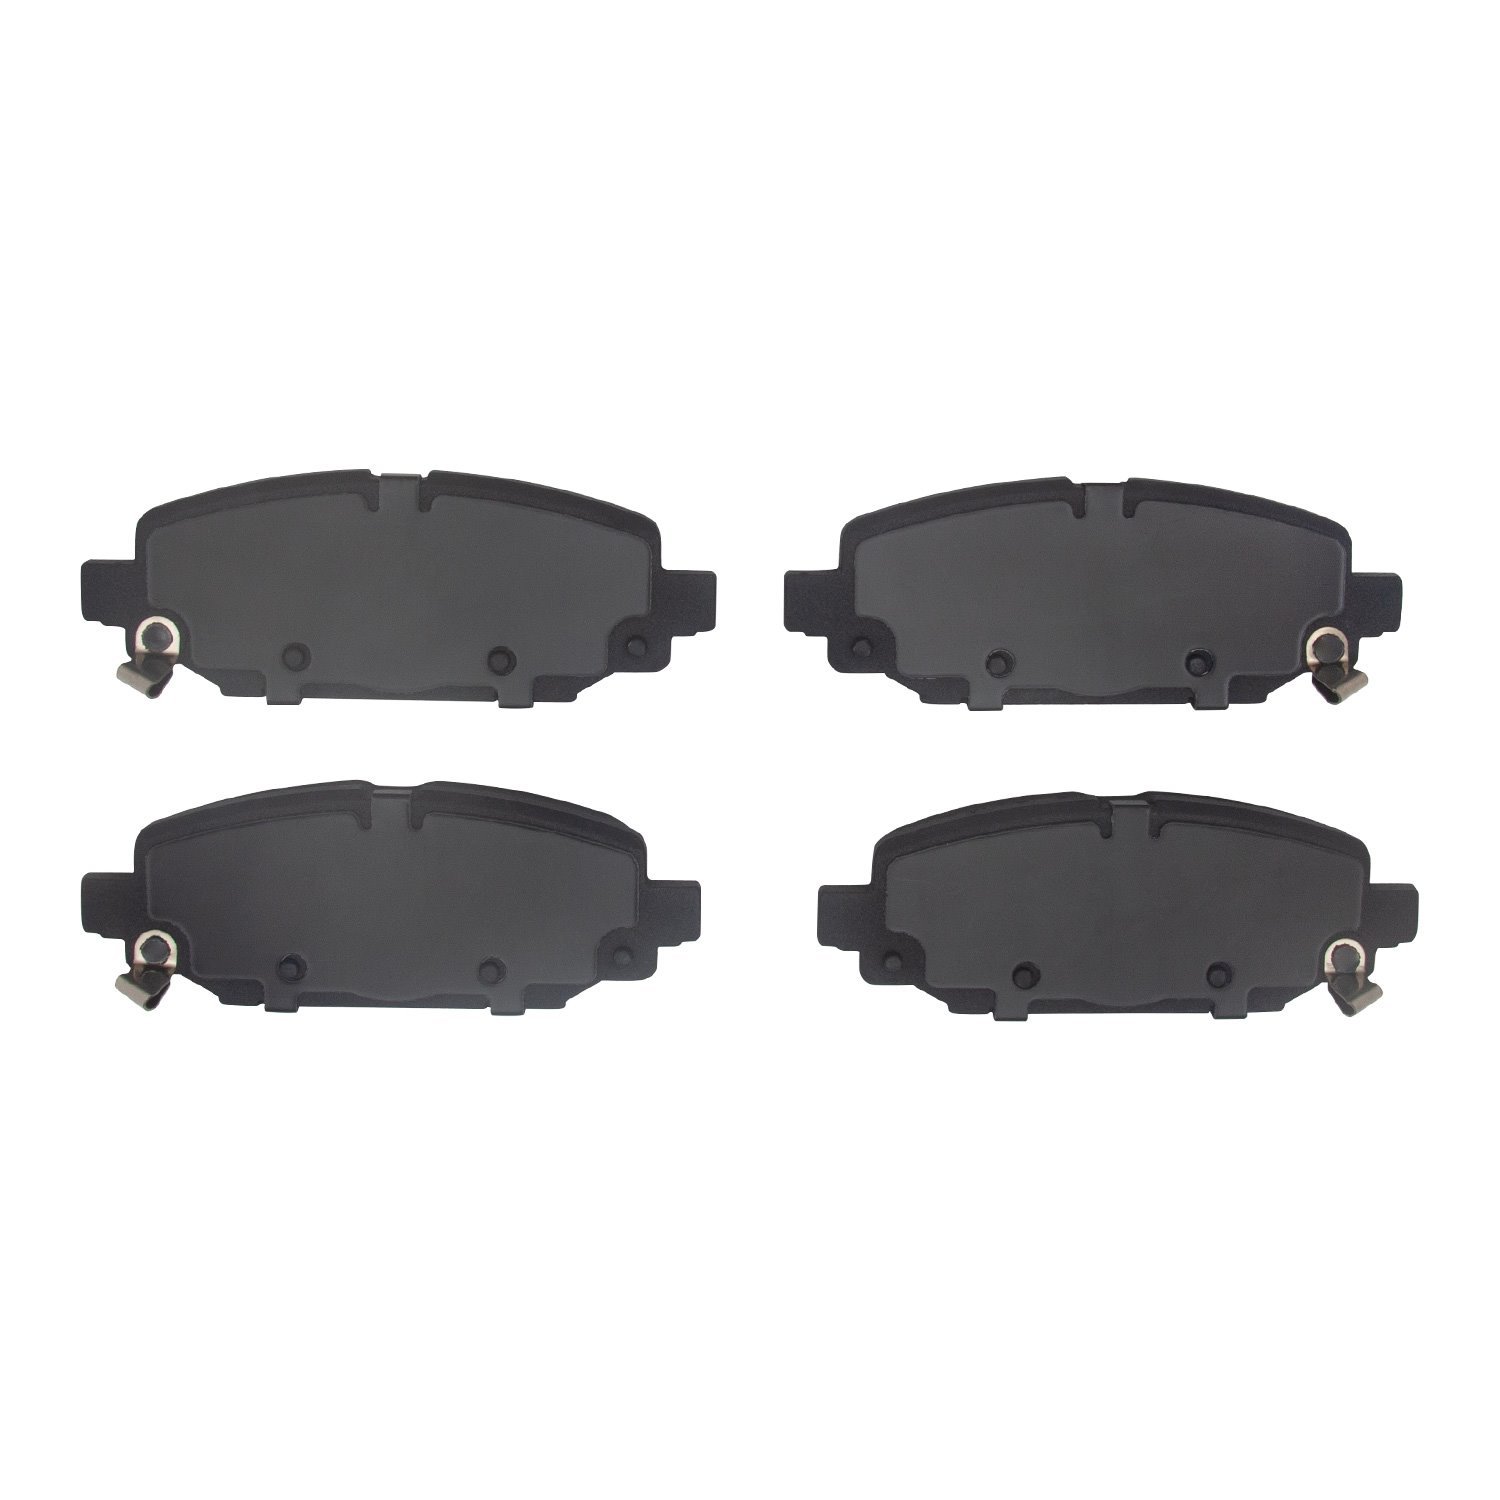 1400-2172-00 Ultimate-Duty Brake Pads Kit, Fits Select Mopar, Position: Rear